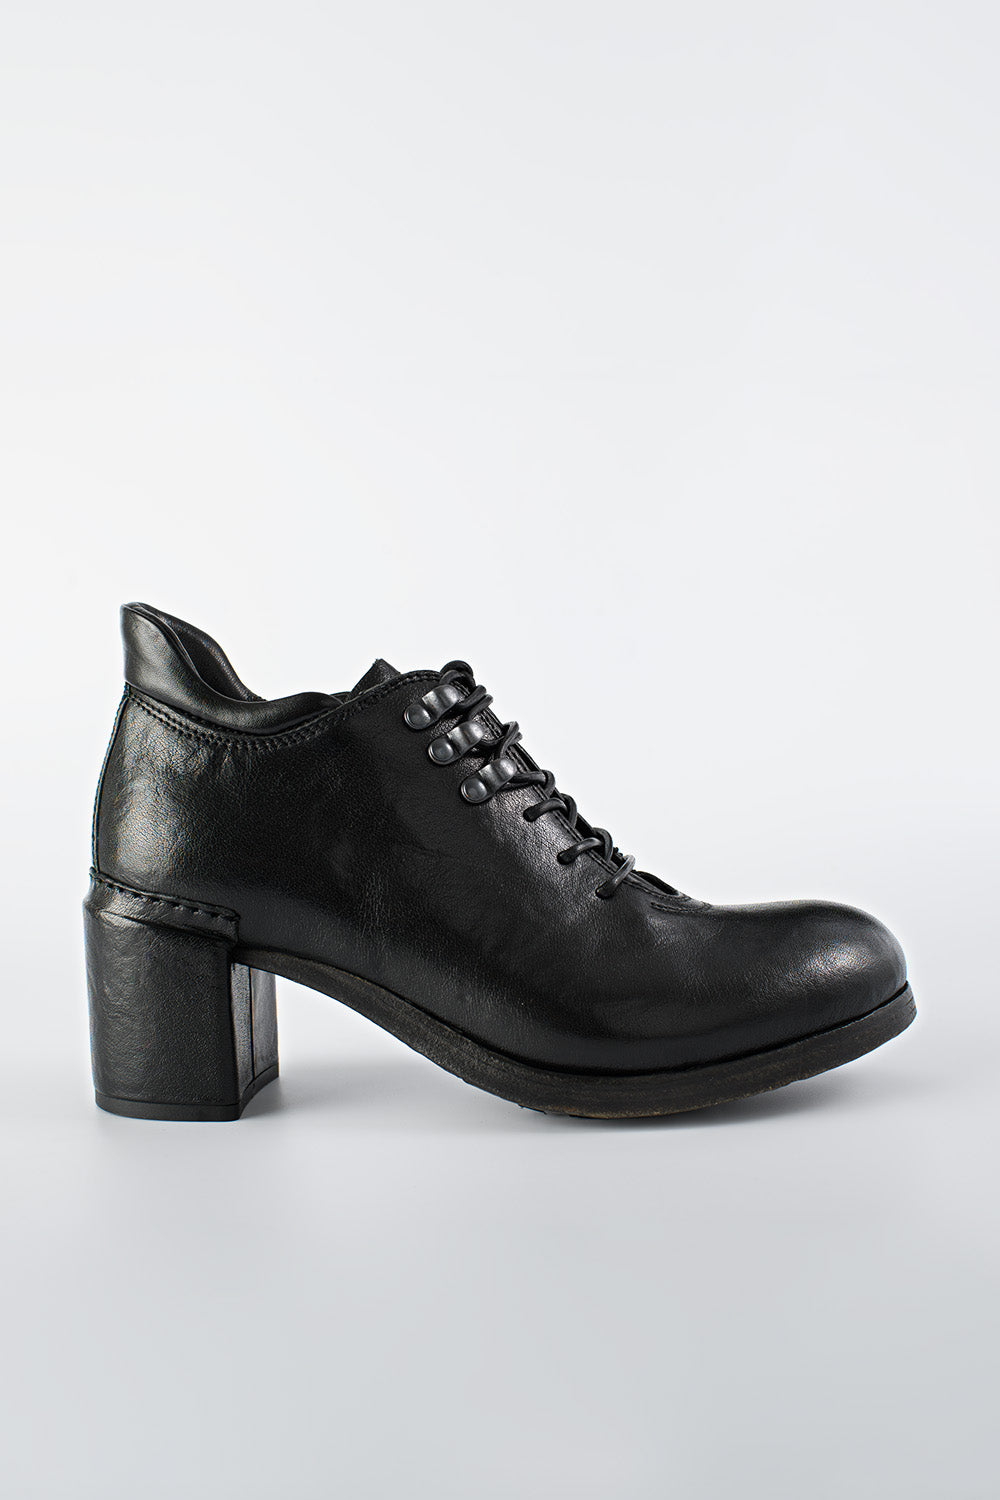 MADISON urban-black lace-up hiking shoes, untamed street